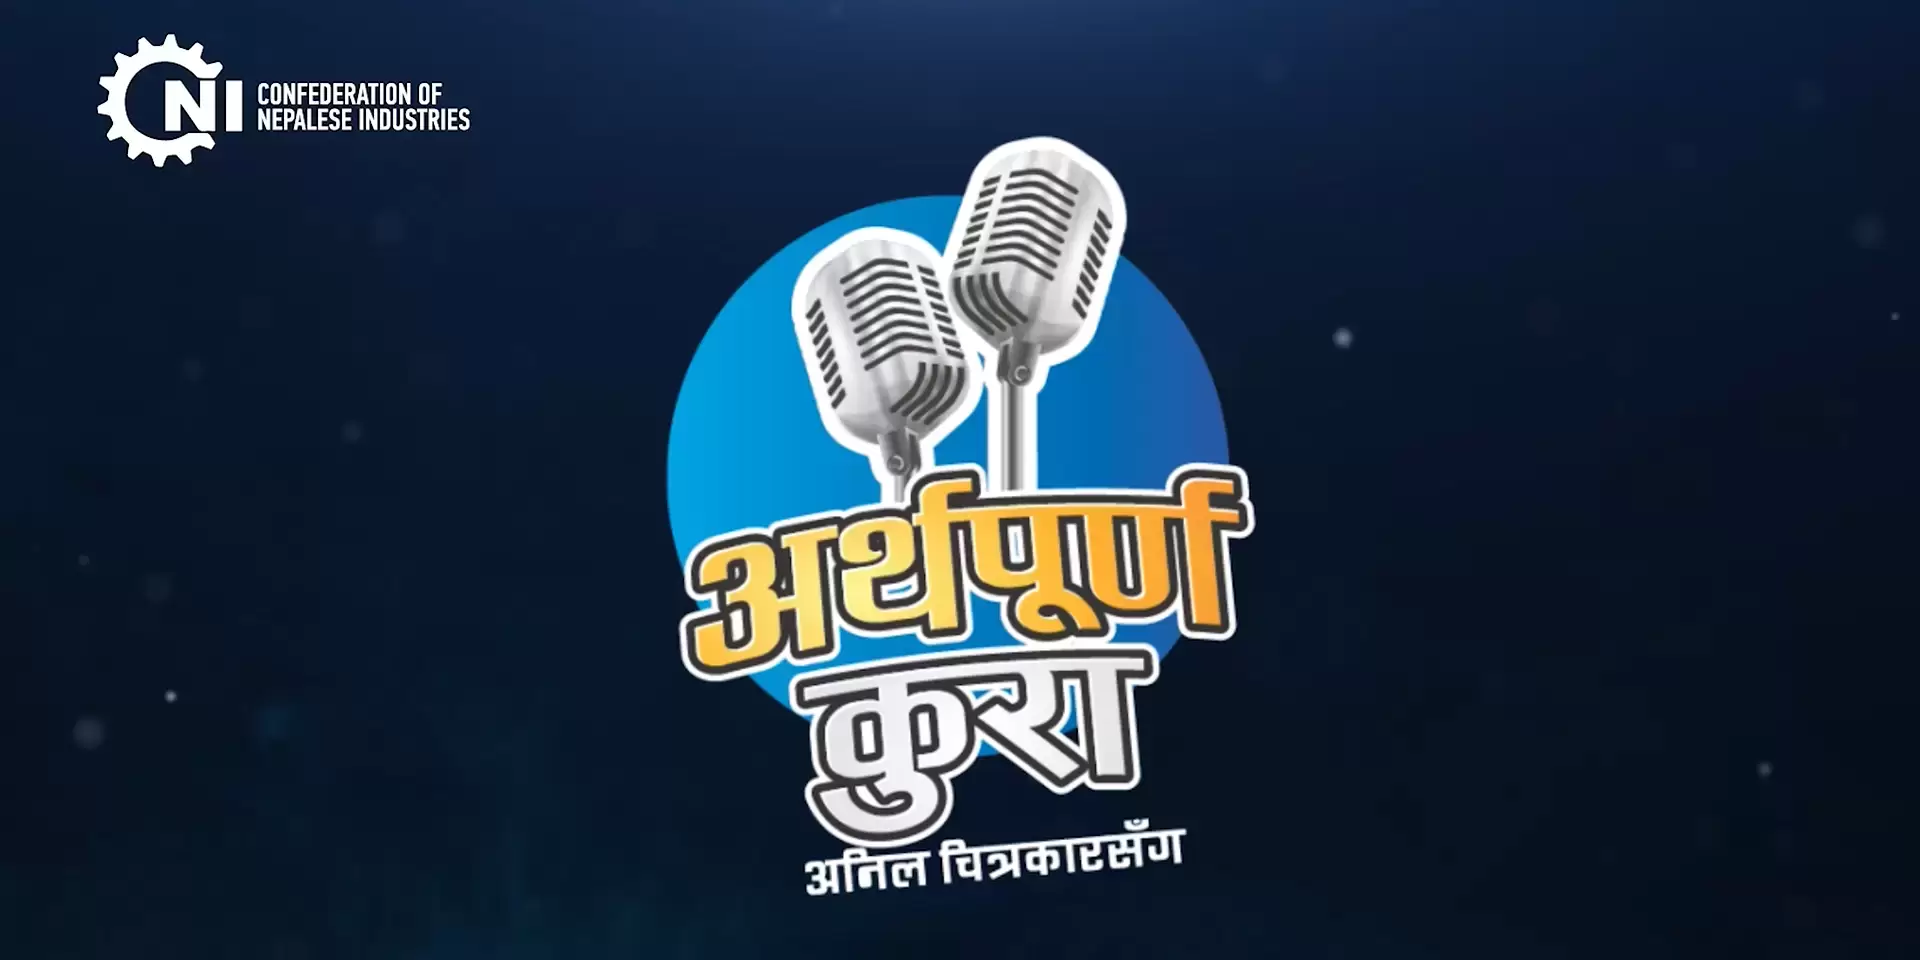 CNI Podcast- Arthapurna Kura with Anil Chitrakar Launched!